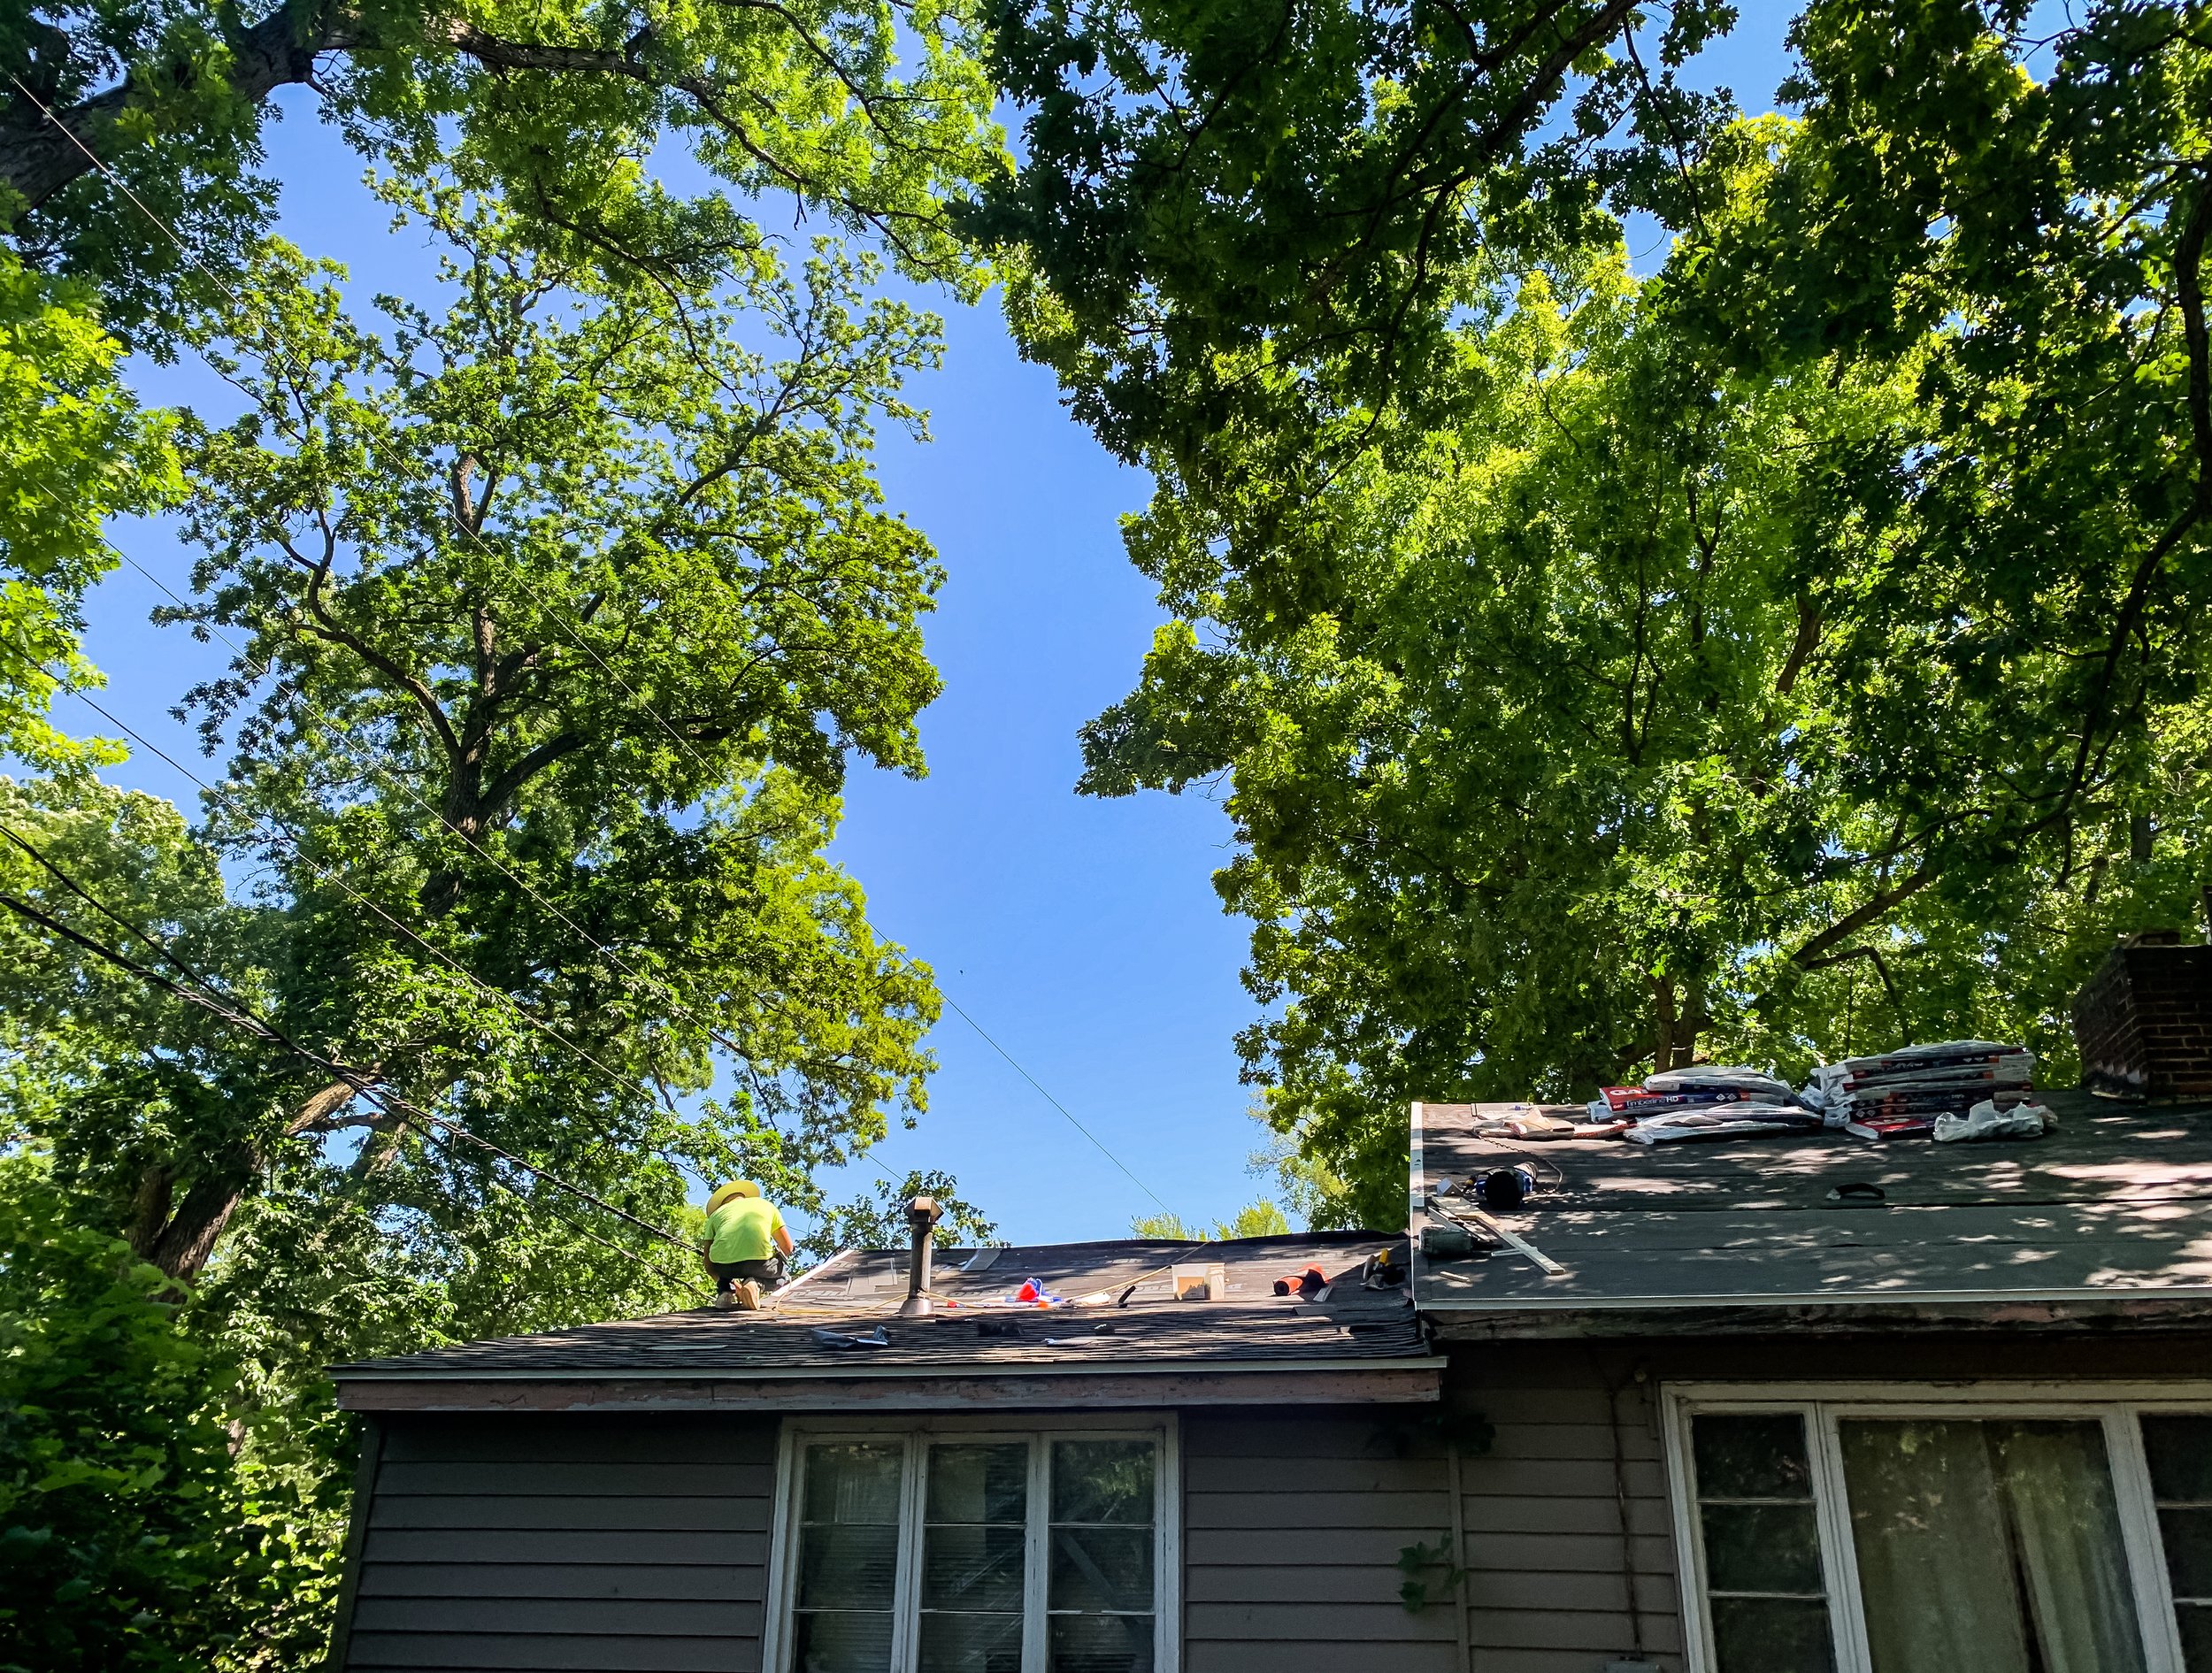 Veteran Roof Replacement Two Progress (9)